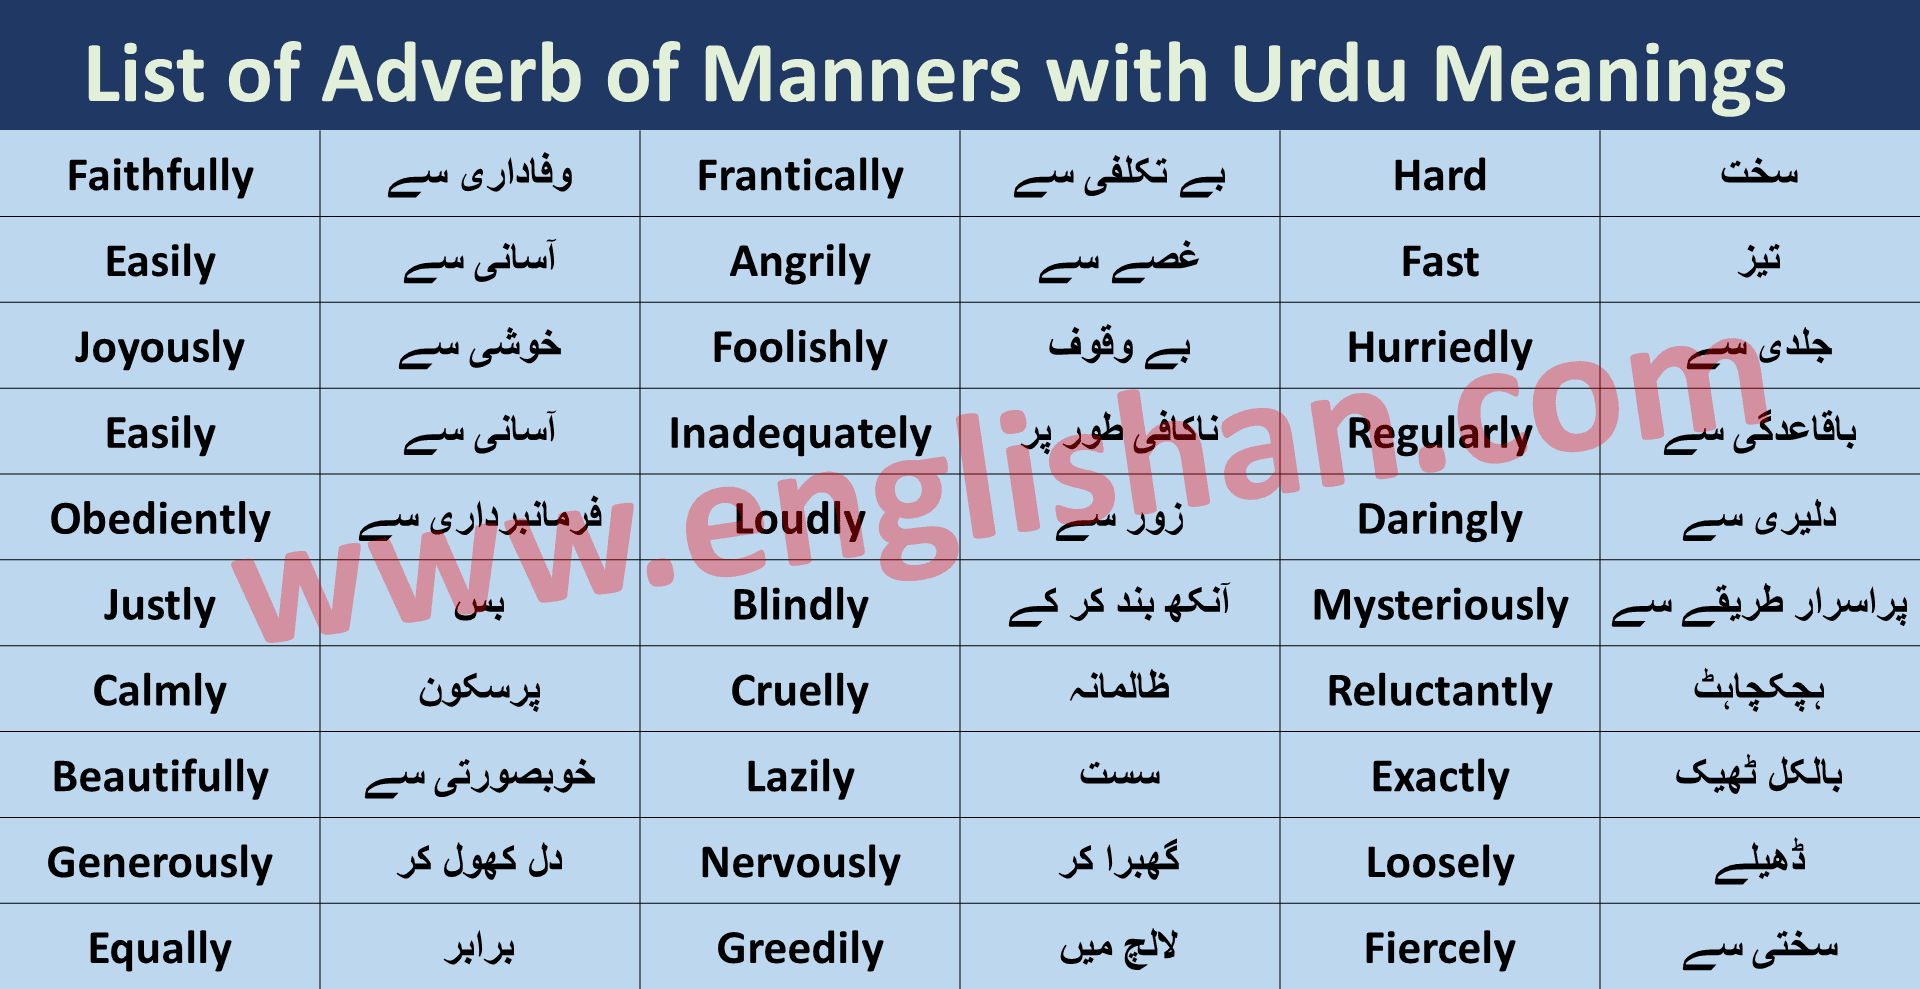 timely manner meaning in urdu